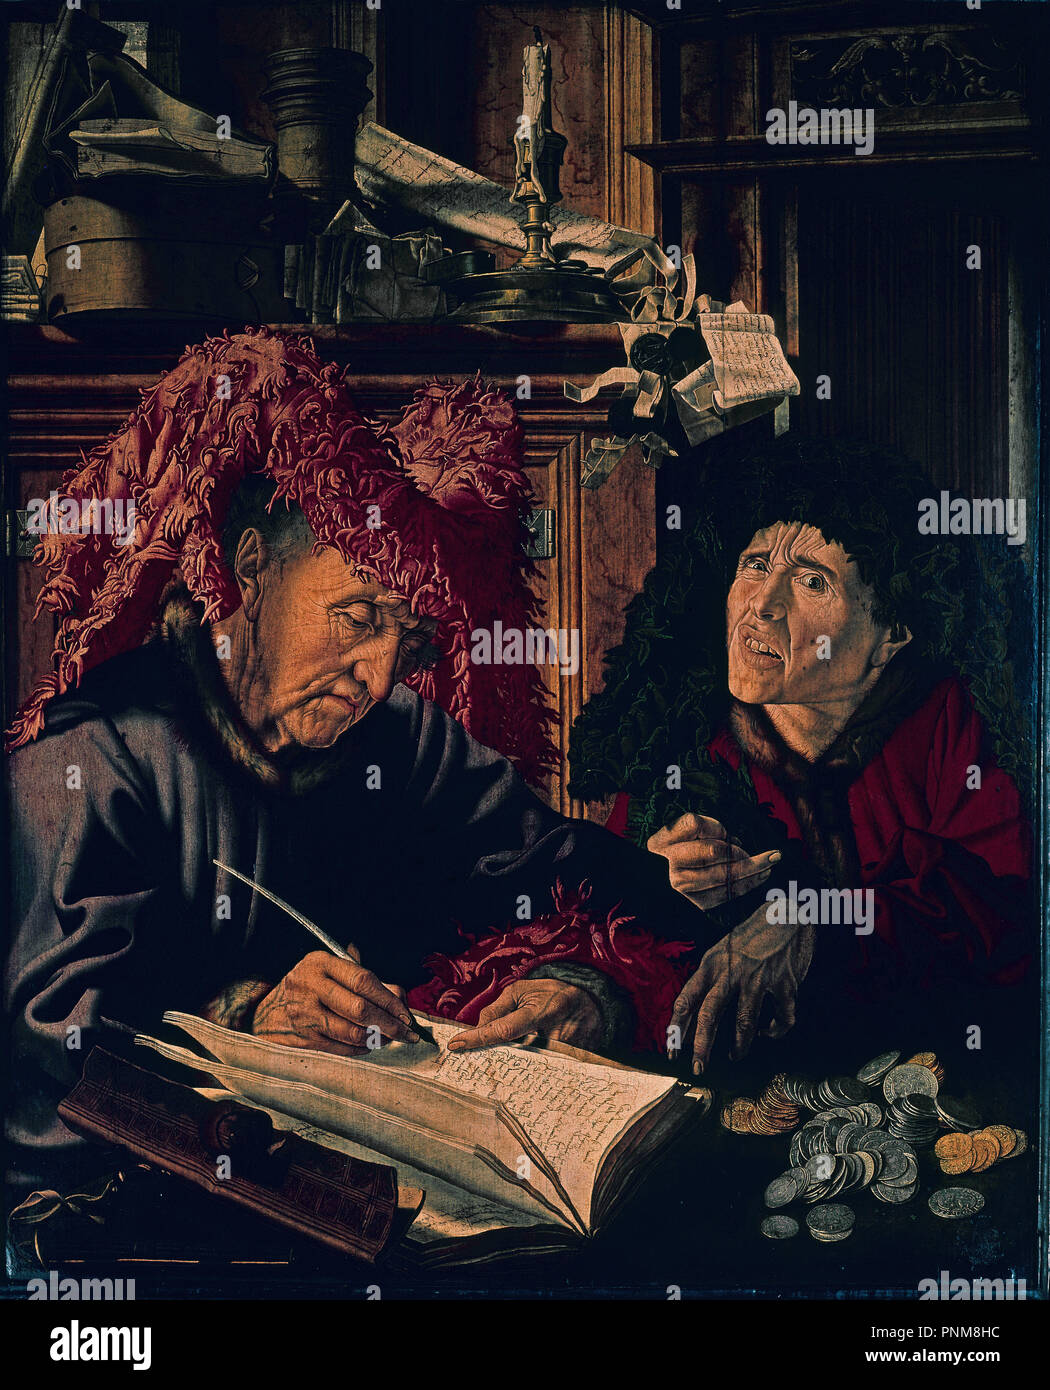 Two Tax Gatherers - 1540 - 92,1x74,3 cm - oil on panel - Italian Renaissance. Author: REYMERSWAELE, MARIANUS VAN. Location: NATIONAL GALLERY. LONDON. ENGLAND. Stock Photo